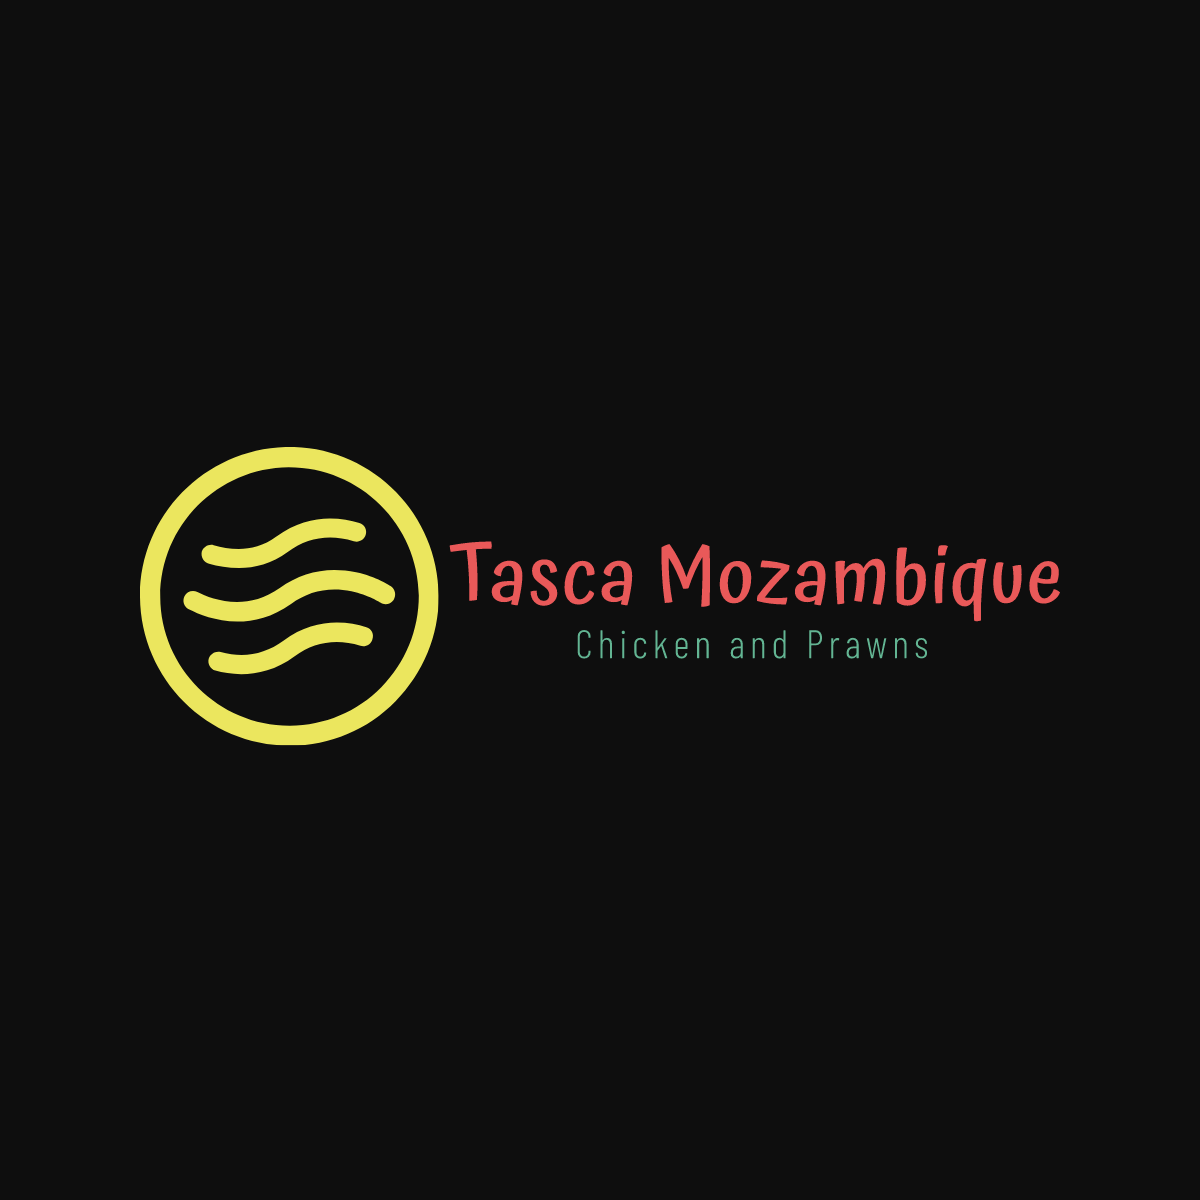 Tasca Mozambique